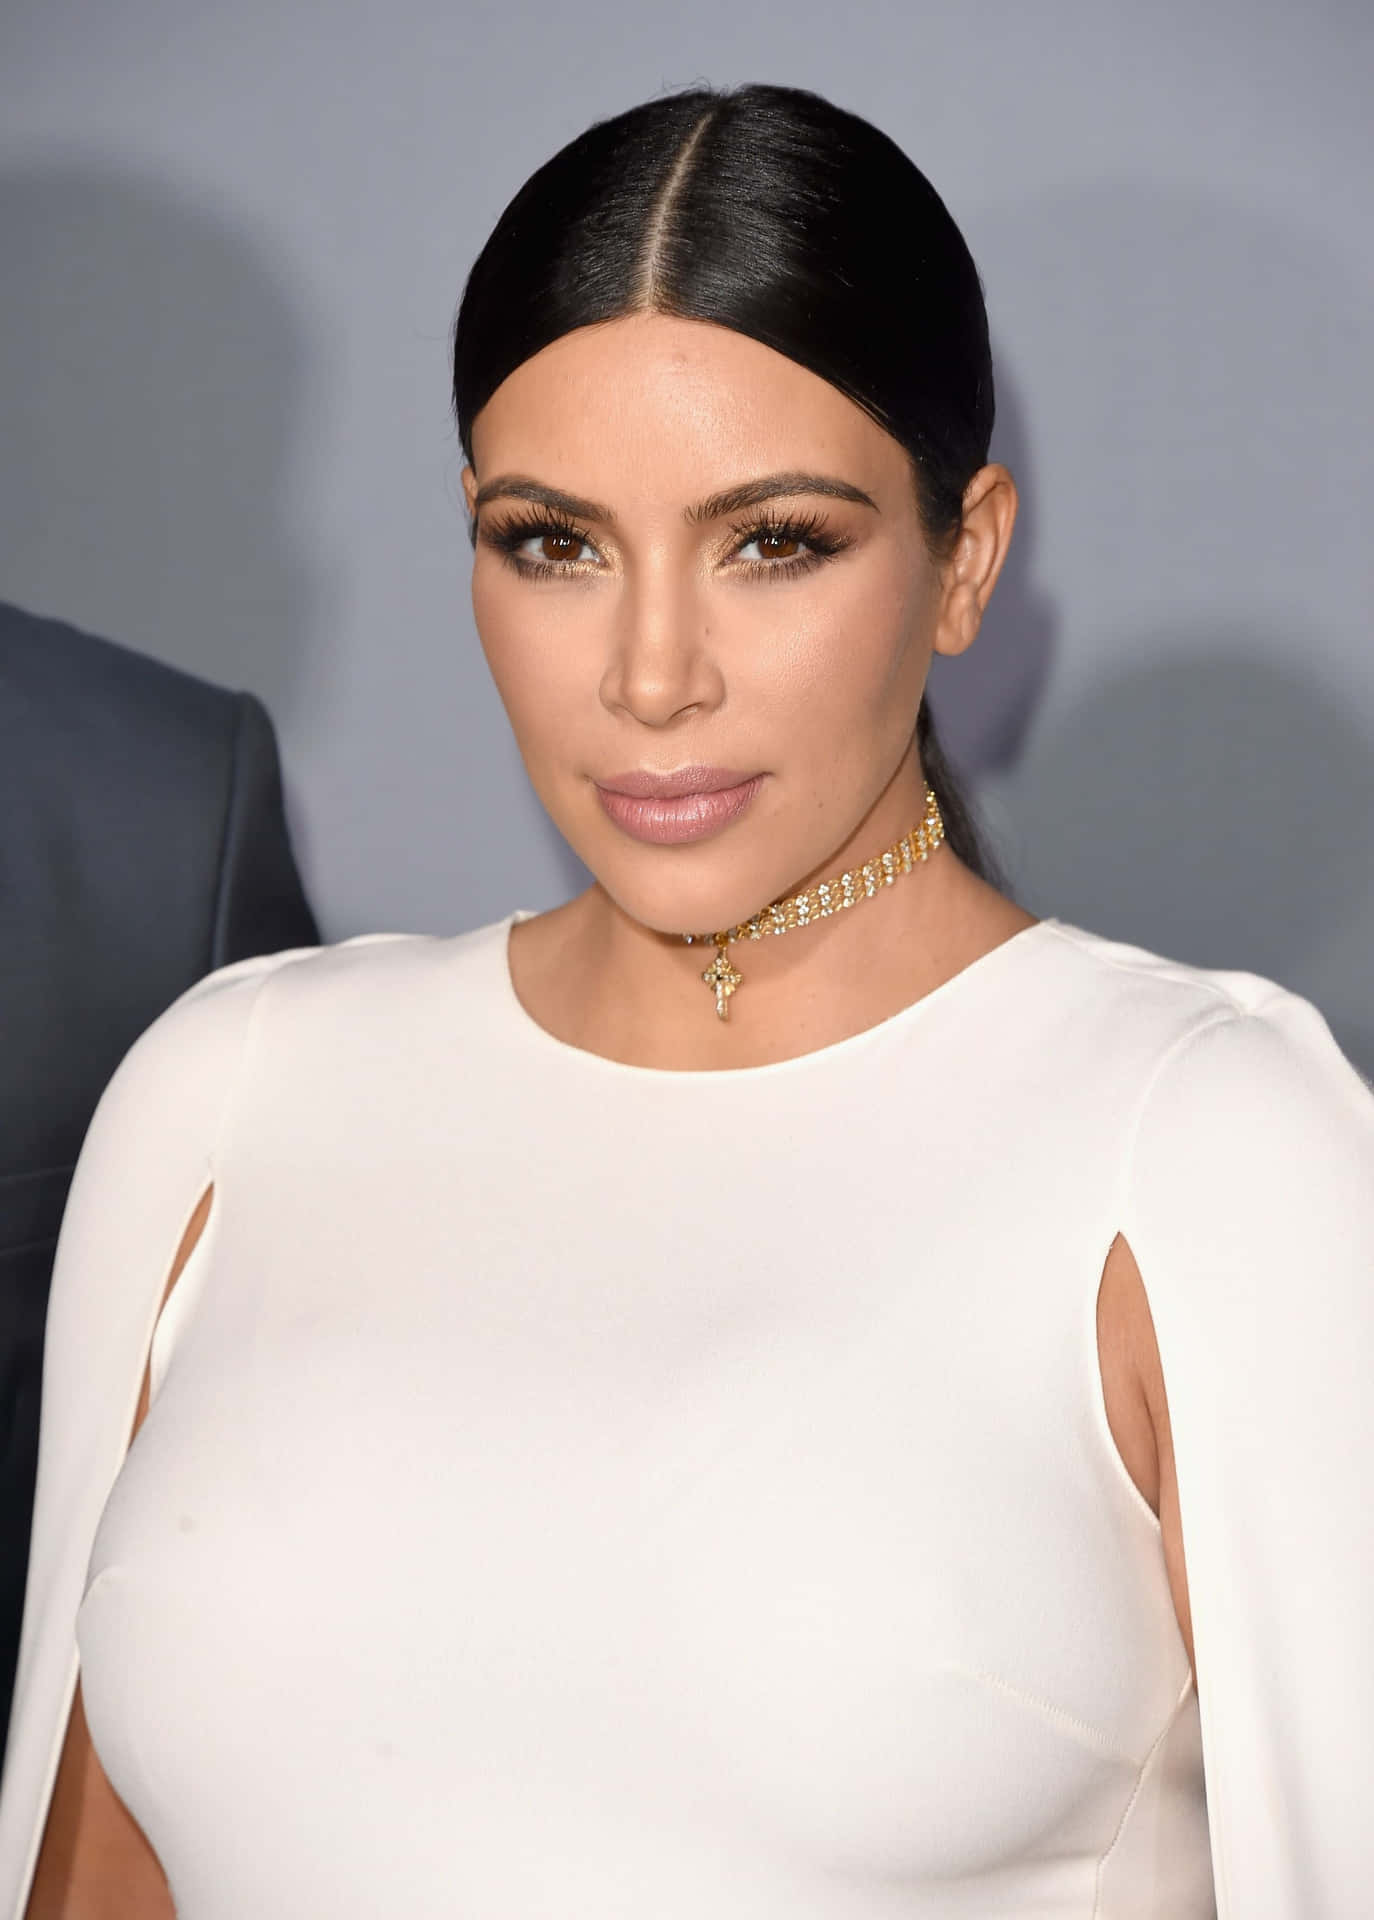 Kim Kardashian's iconic look